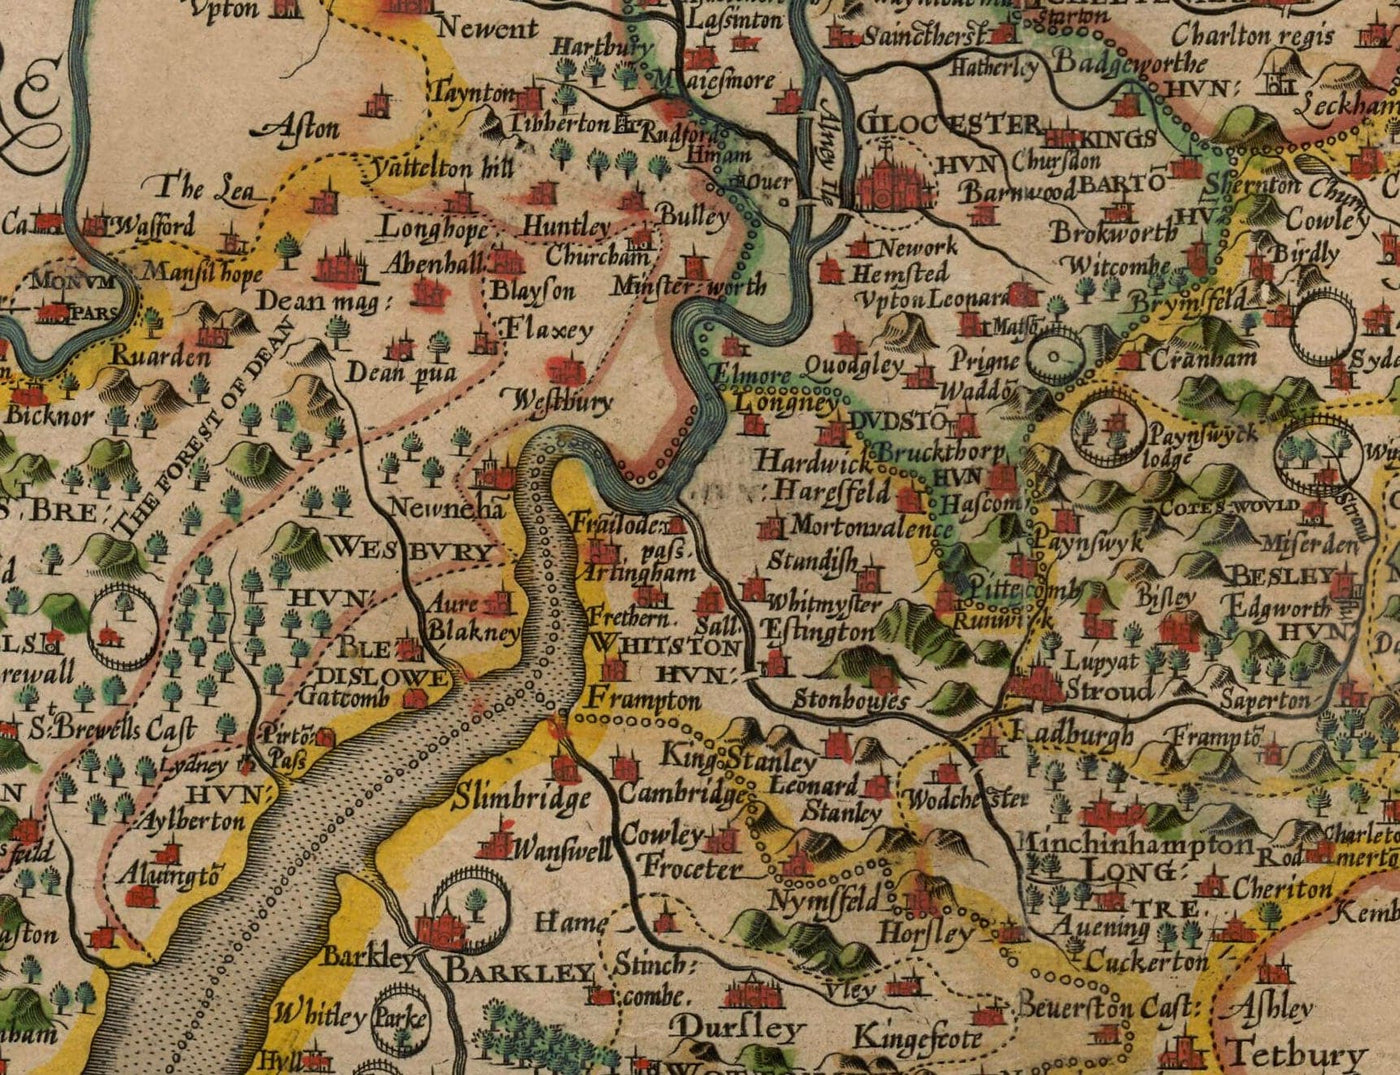 Alte Karte von Gloucestershire, 1611, John Speed ​​- Bristol, Cheltenham, Gloucester, Kingswood, Filton